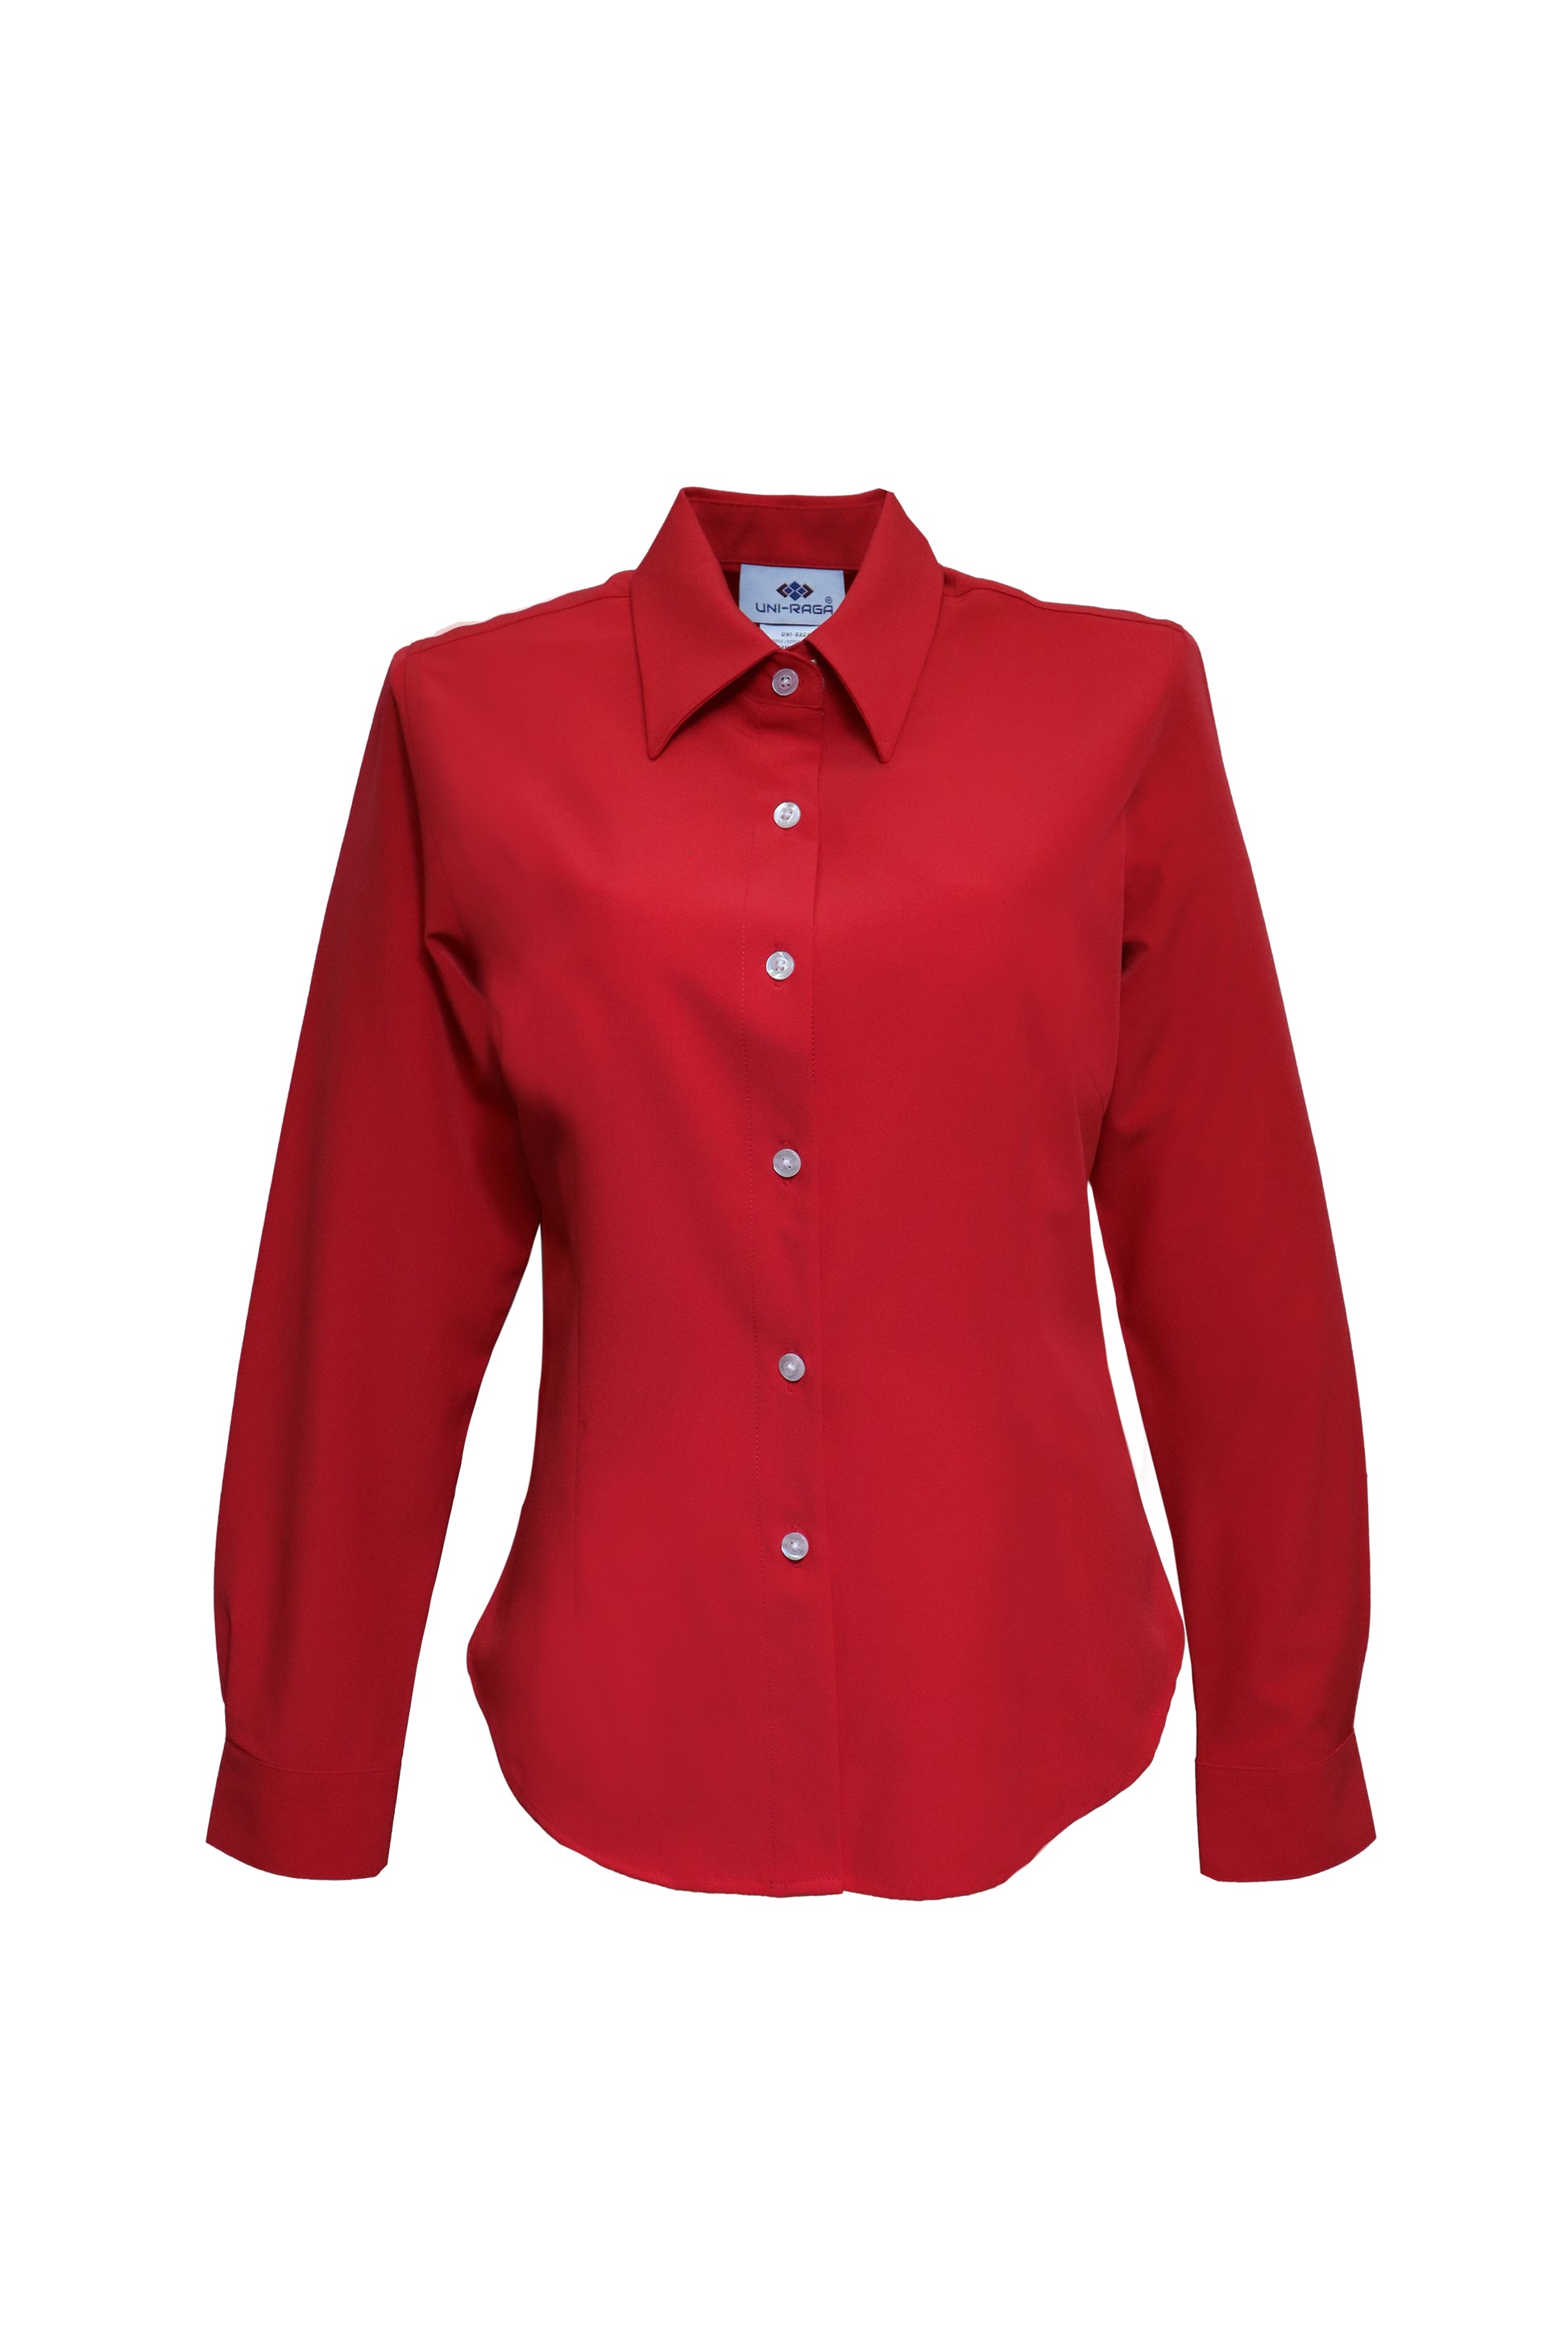 Comprar camiseta roja de manga larga con encaje online barata para mujer.